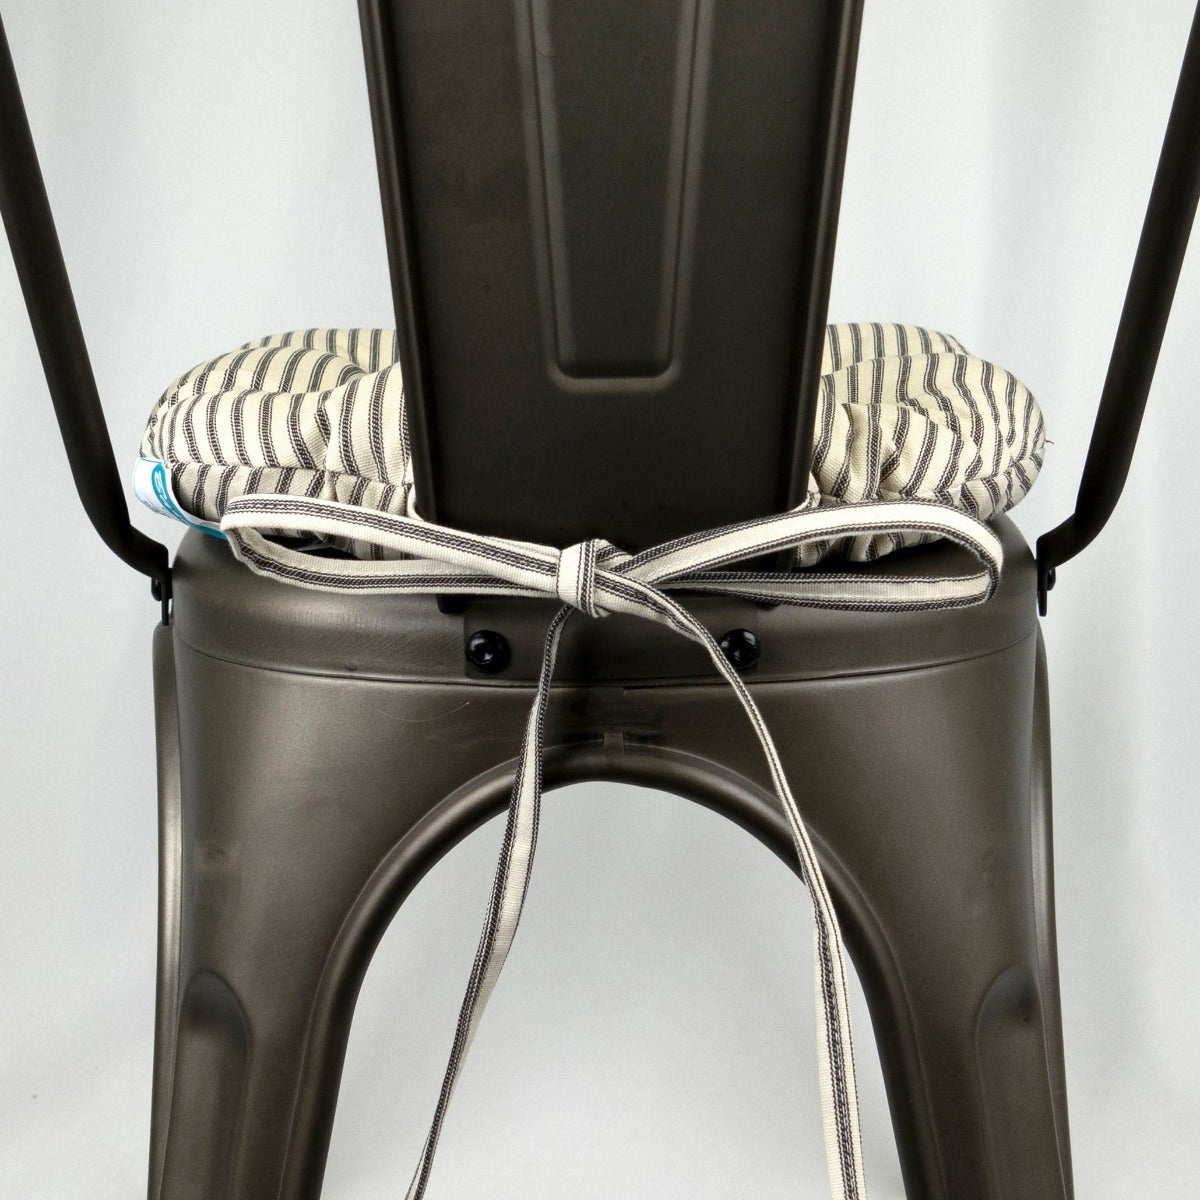 Ticking Stripe Black Dining Chair Pad - Reversible, Latex Foam Fill